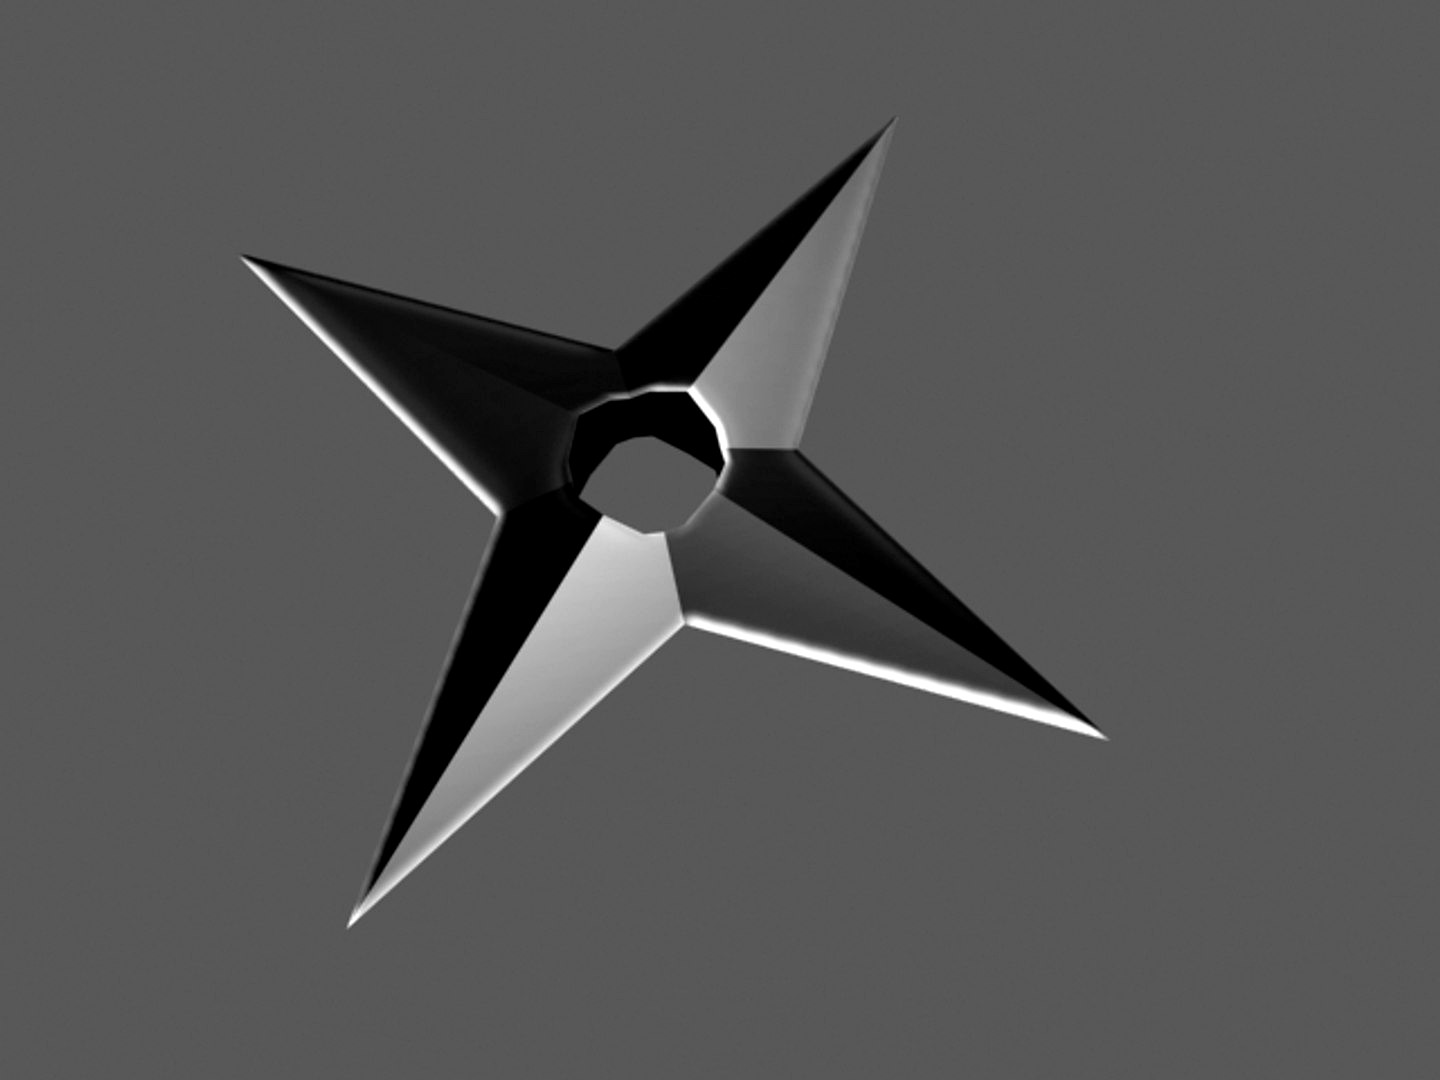 Star Shuriken (Throwing Star)